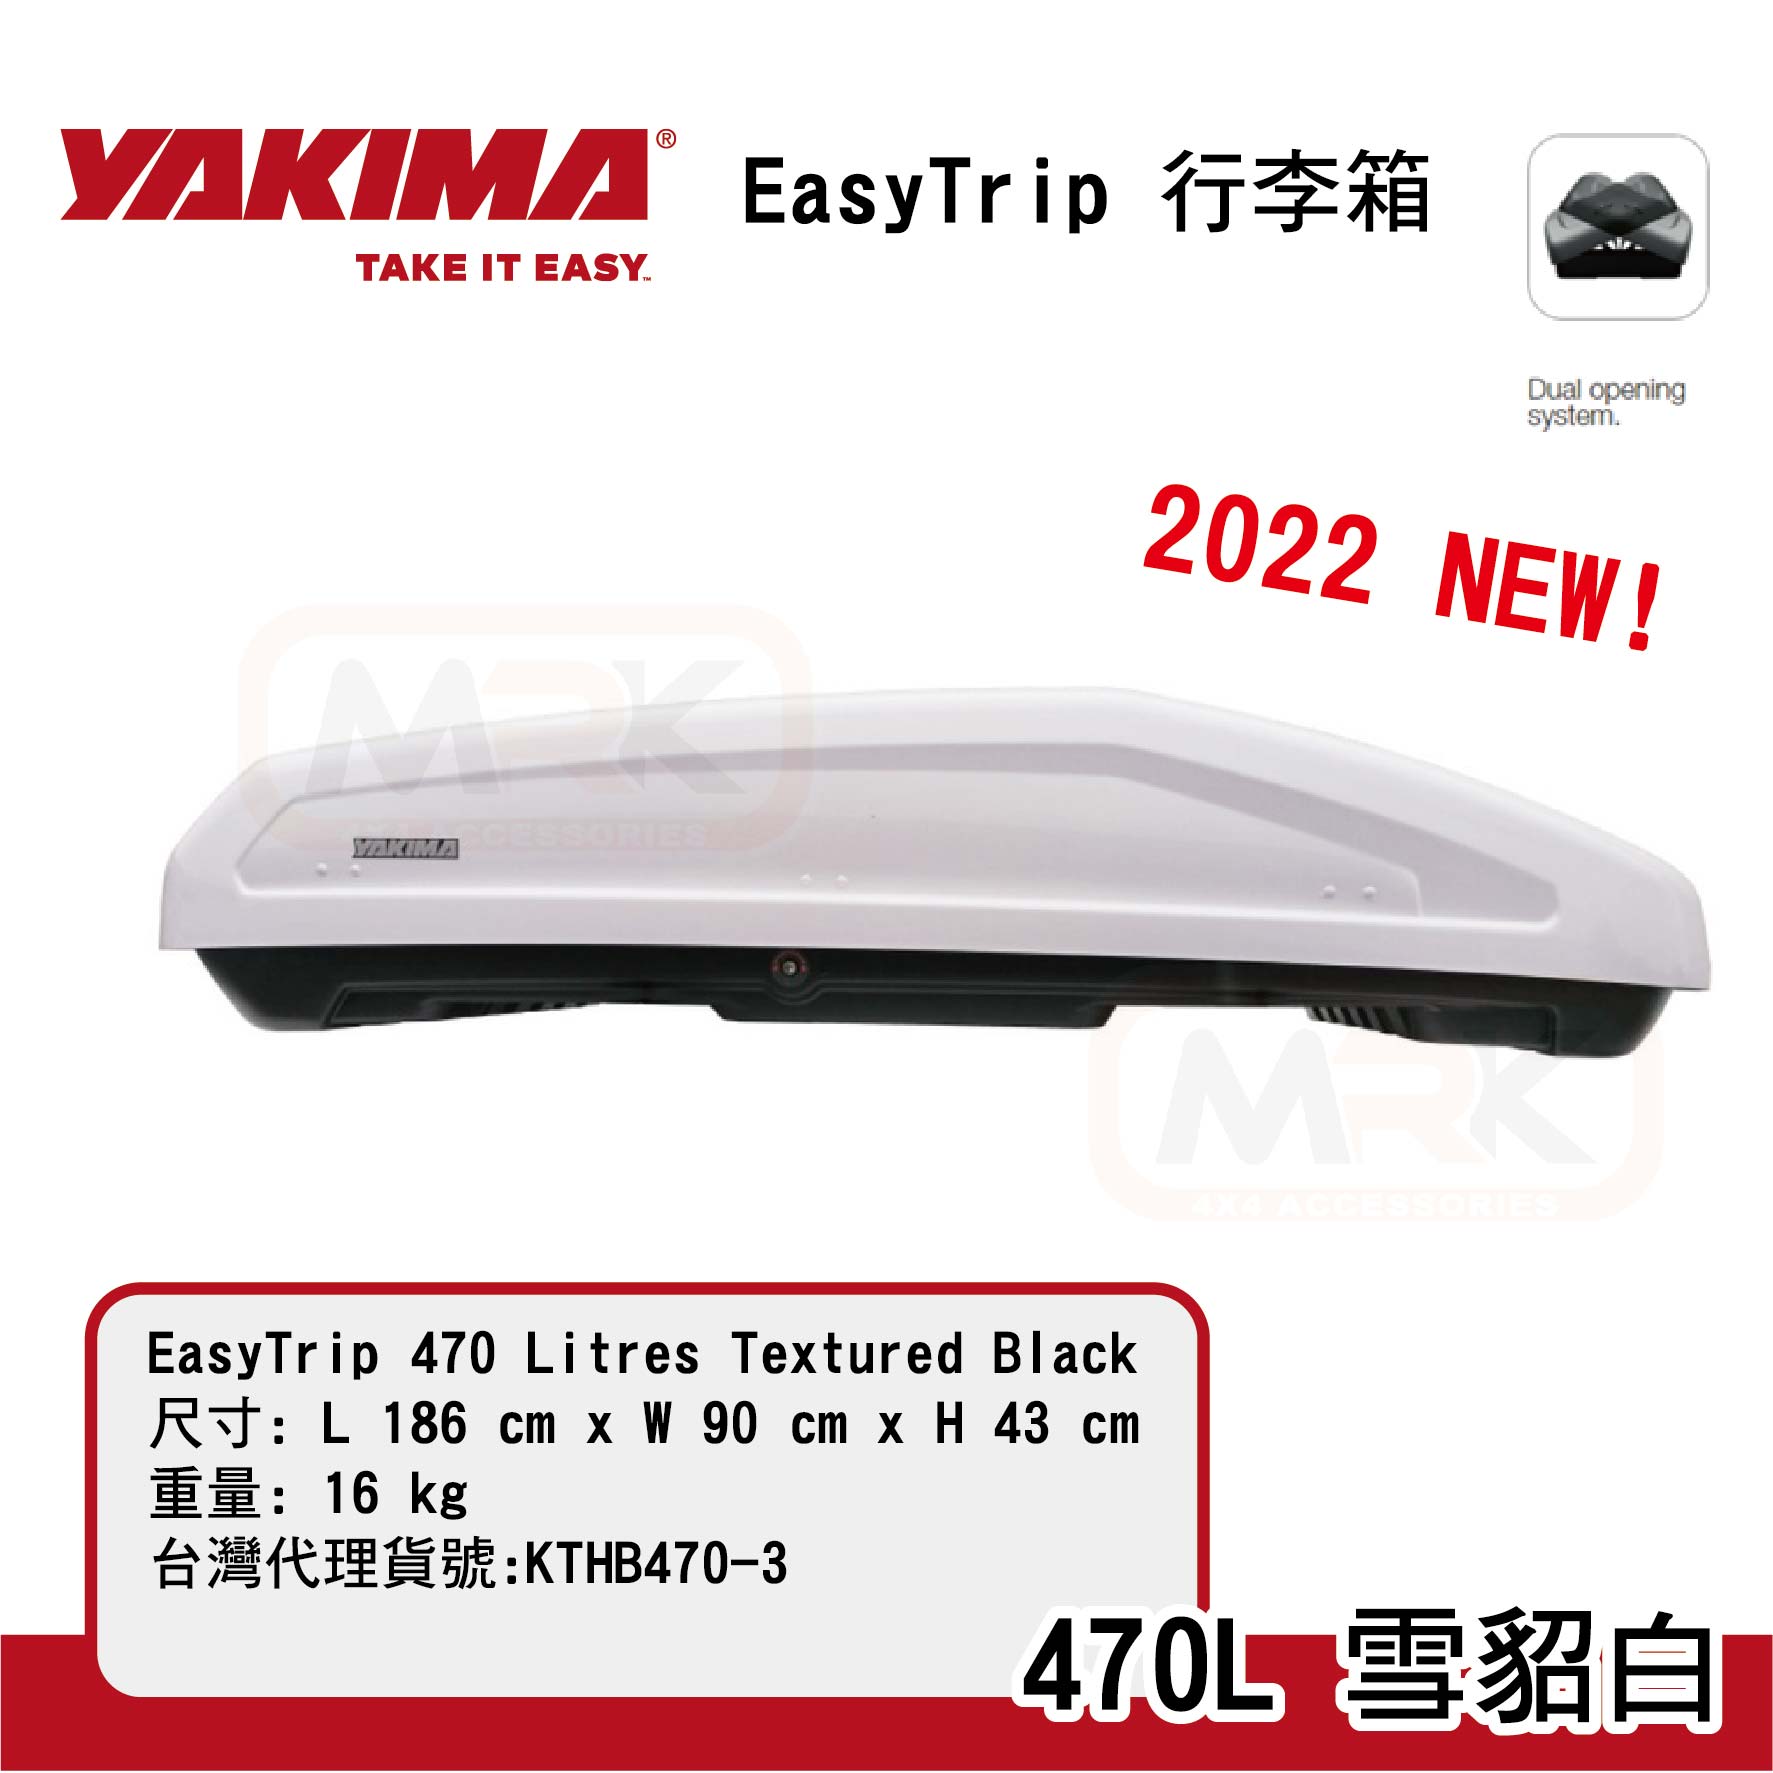 【MRK】YAKIMA 2022新款行李箱 EasyTrip 470L 雪貂白 Easy Trip KTHB470-3